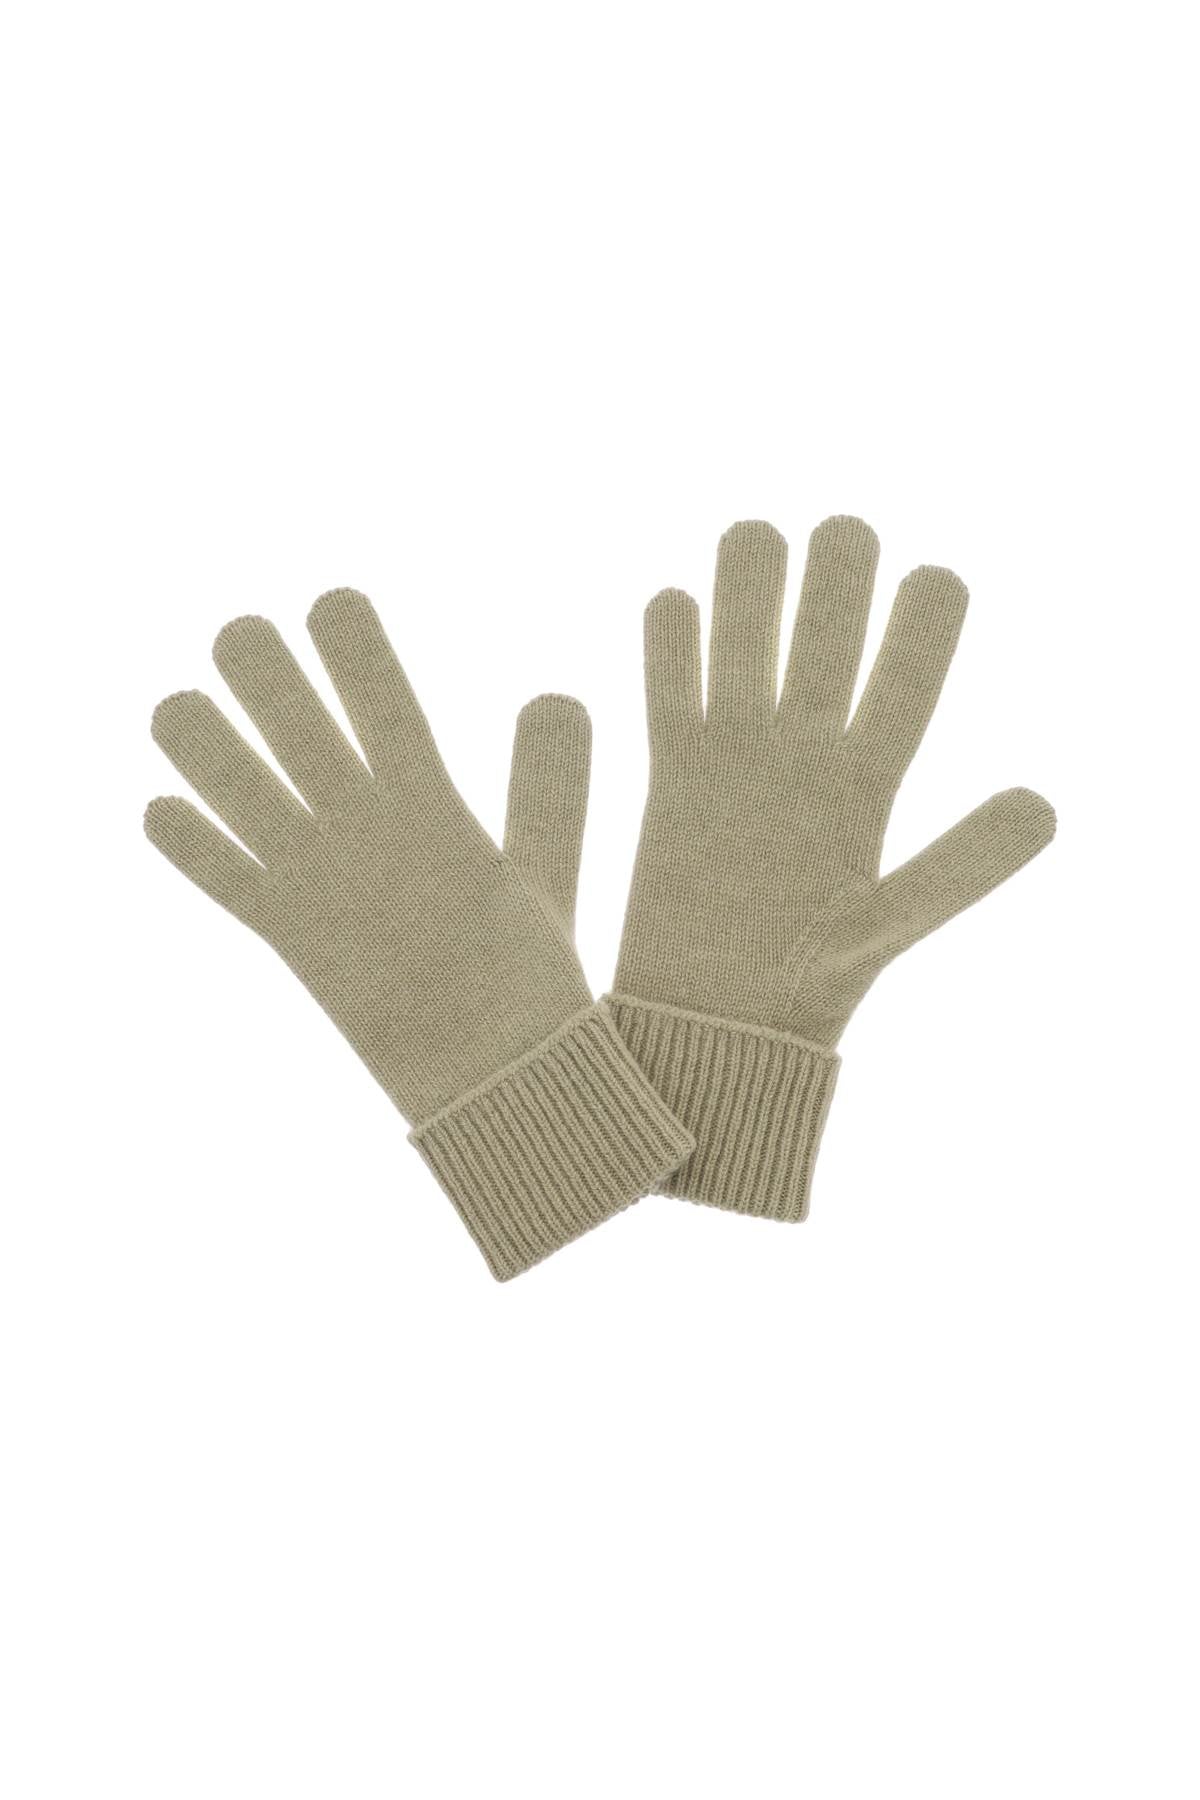 Burberry Burberry cashmere gloves